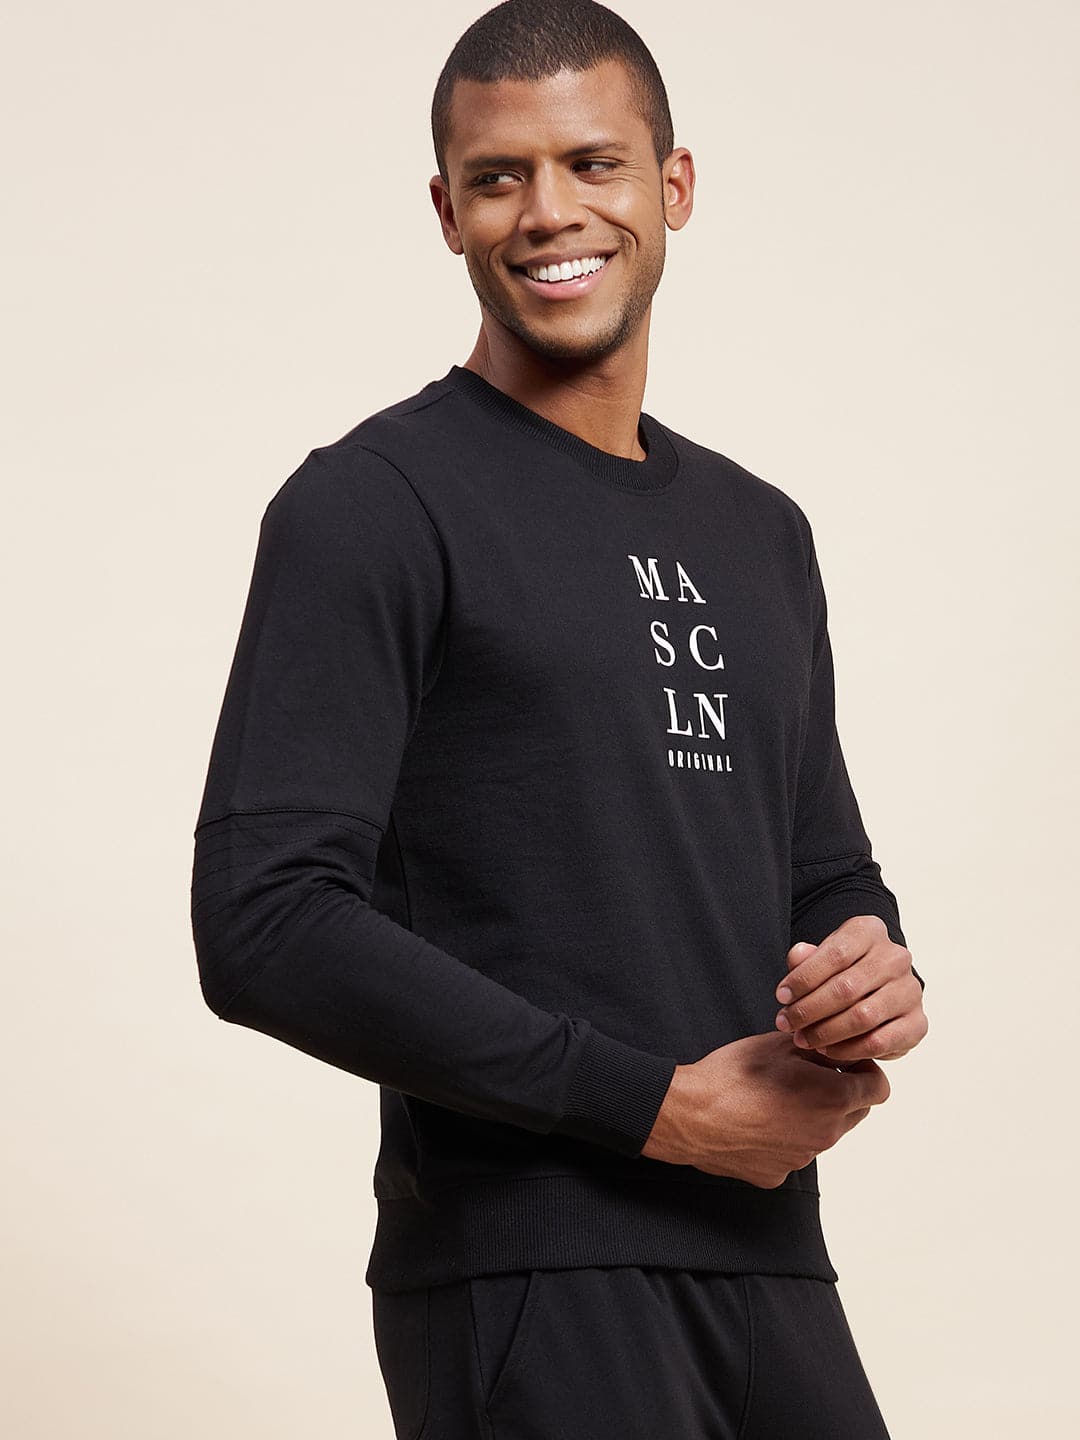 Men's Black Vertical MASCLN Print Sweatshirt - LYUSH-MASCLN